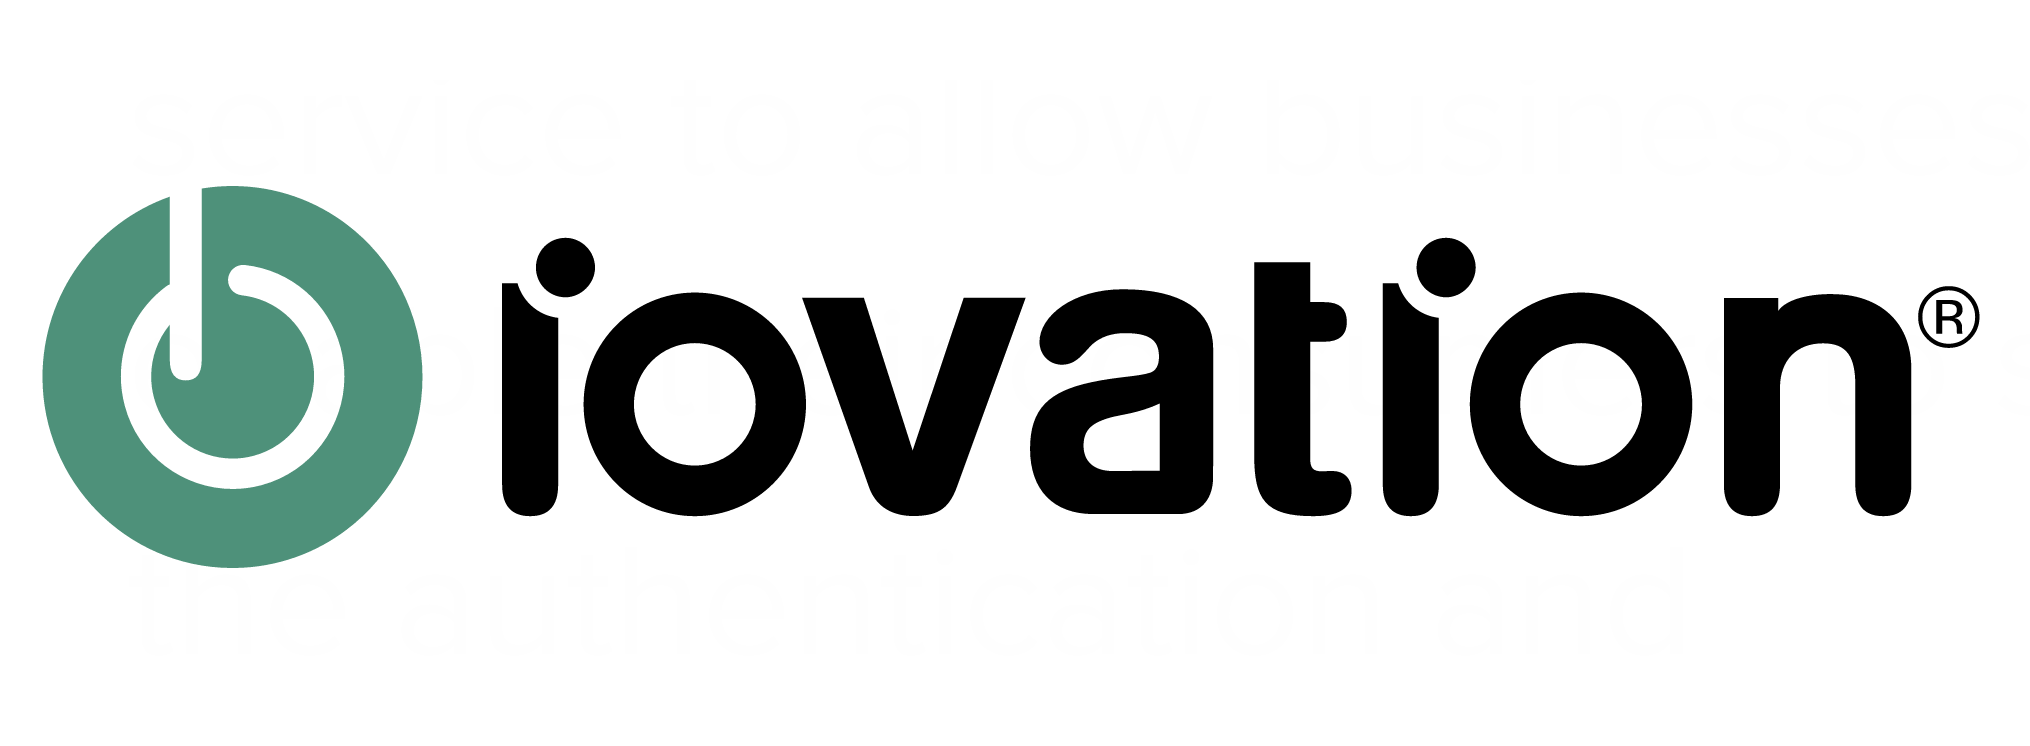 iovation-logo